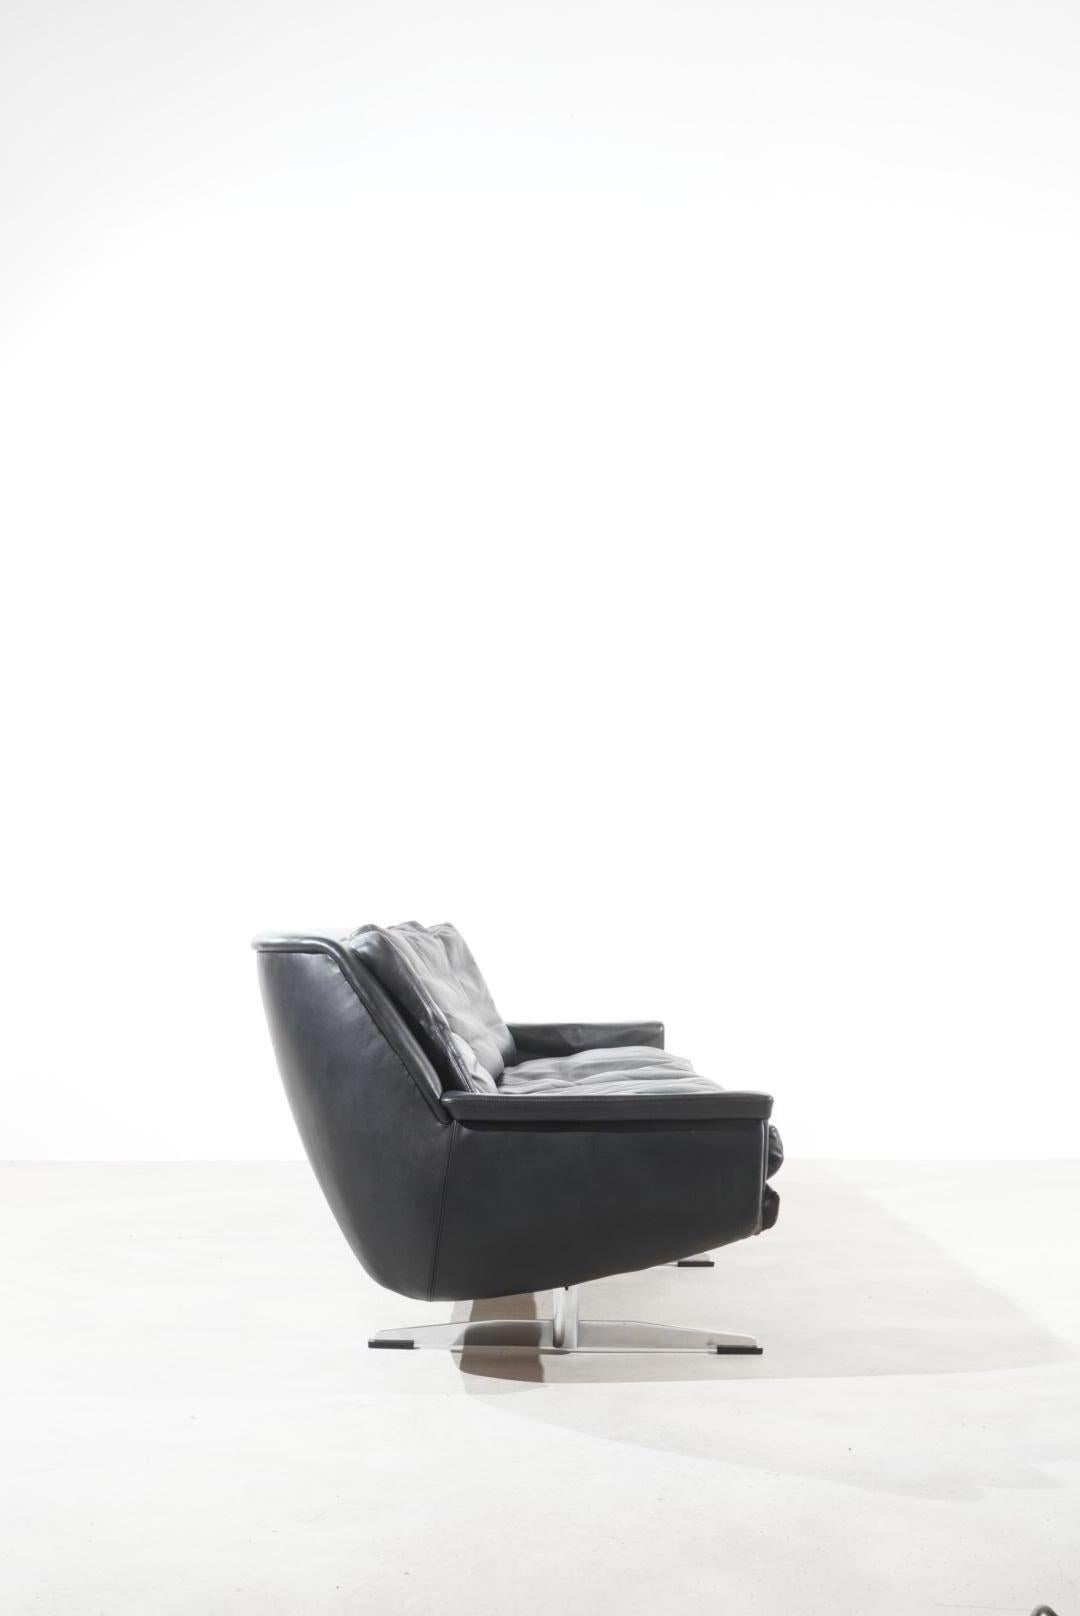 Steel Werner Langenfeld Model 802 Black Leather Sofa Mid Century